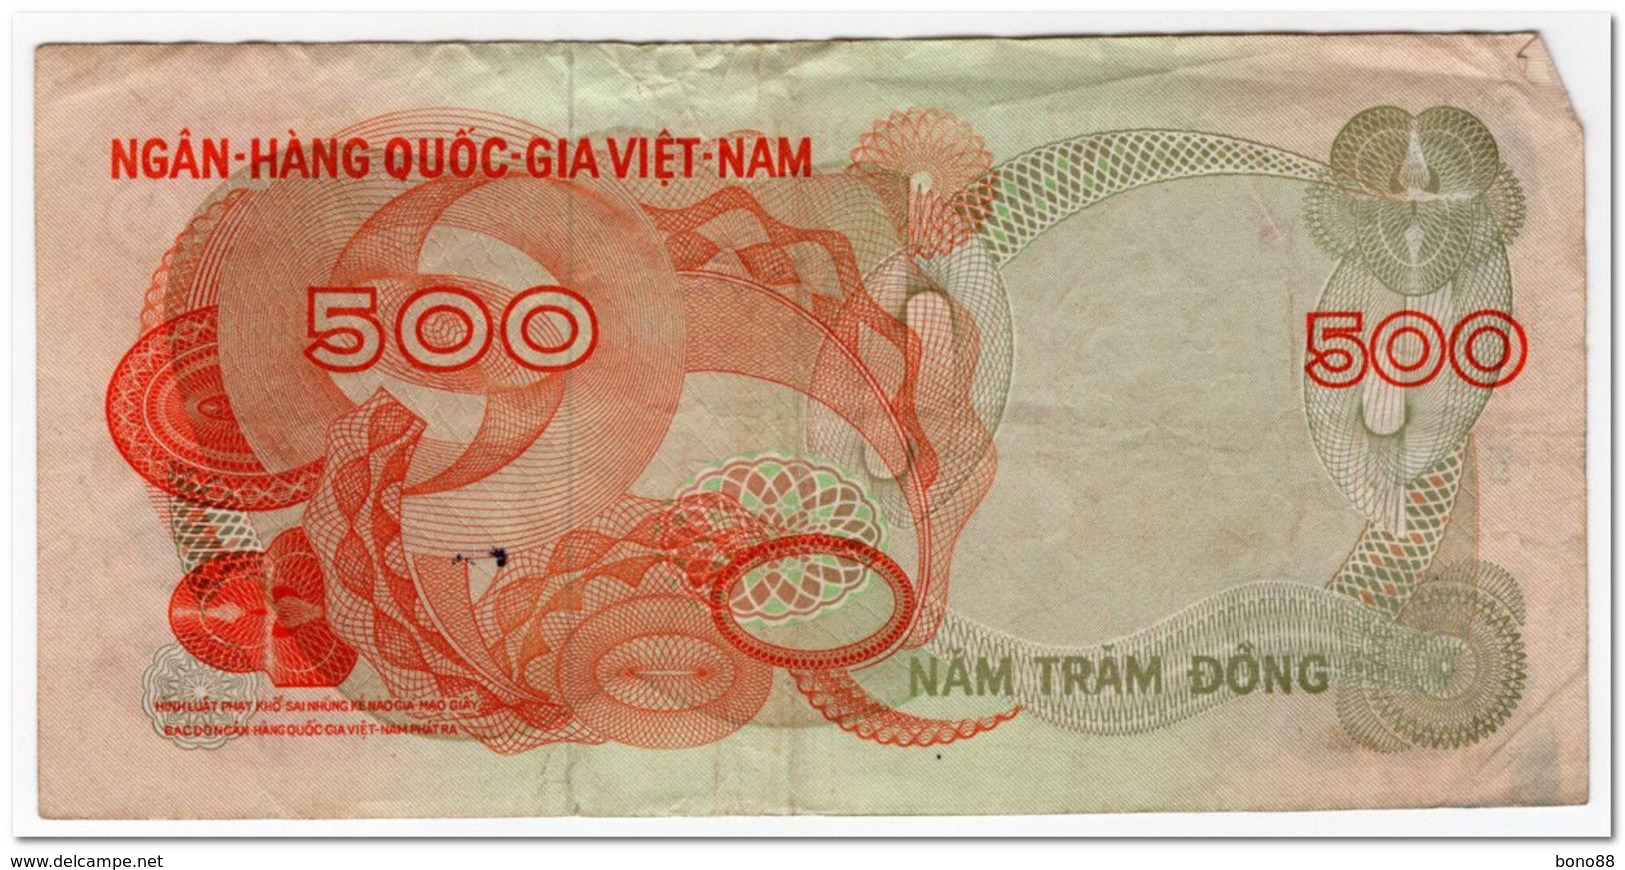 VIET NAM-SOUTH,500 DONG,1970,P.28,VF - Vietnam